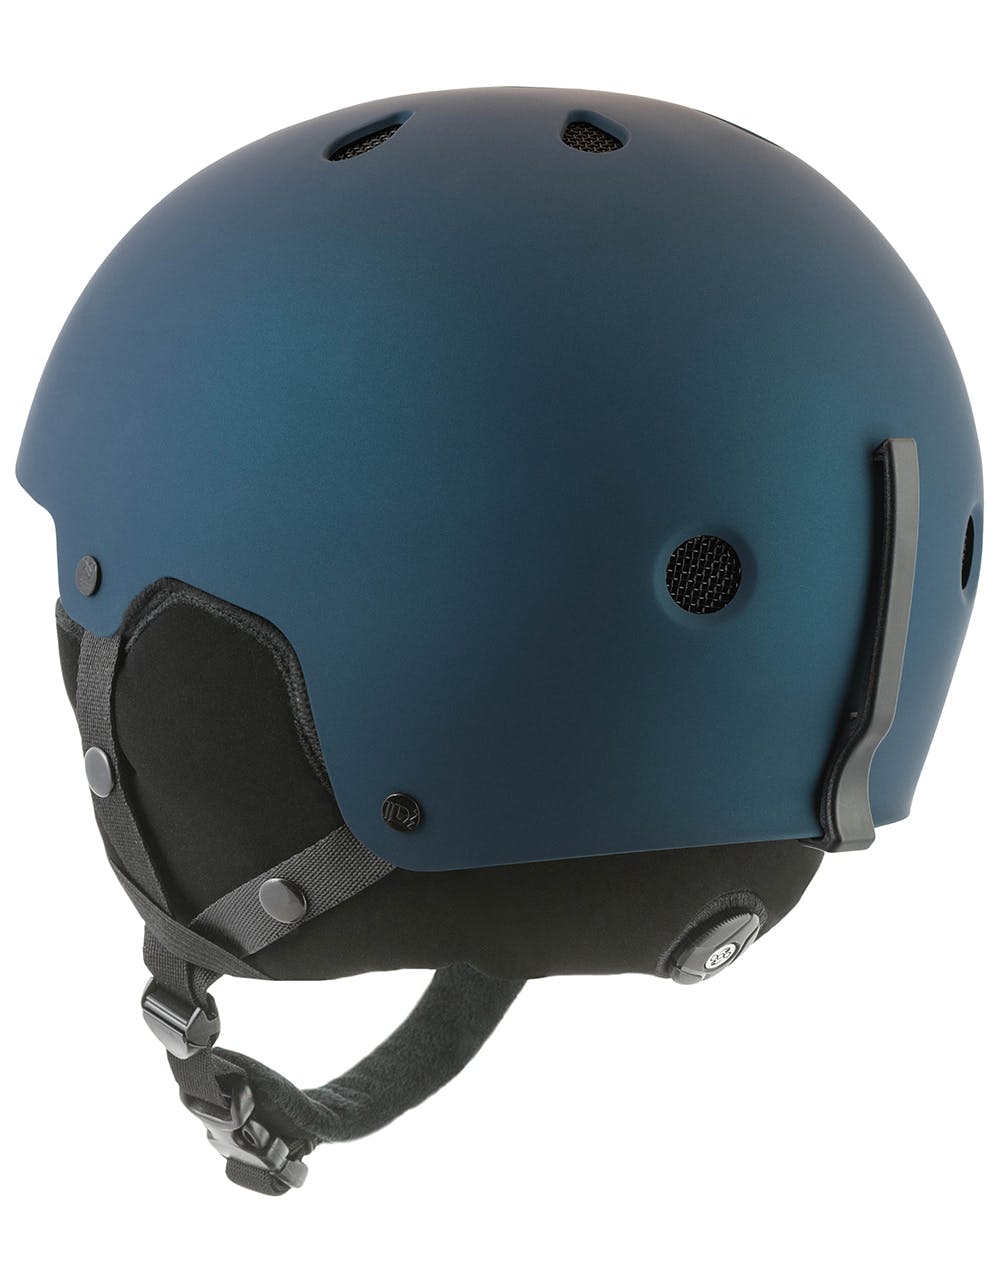 Sandbox Legend Apex 2020 Snowboard Helmet - Ocean